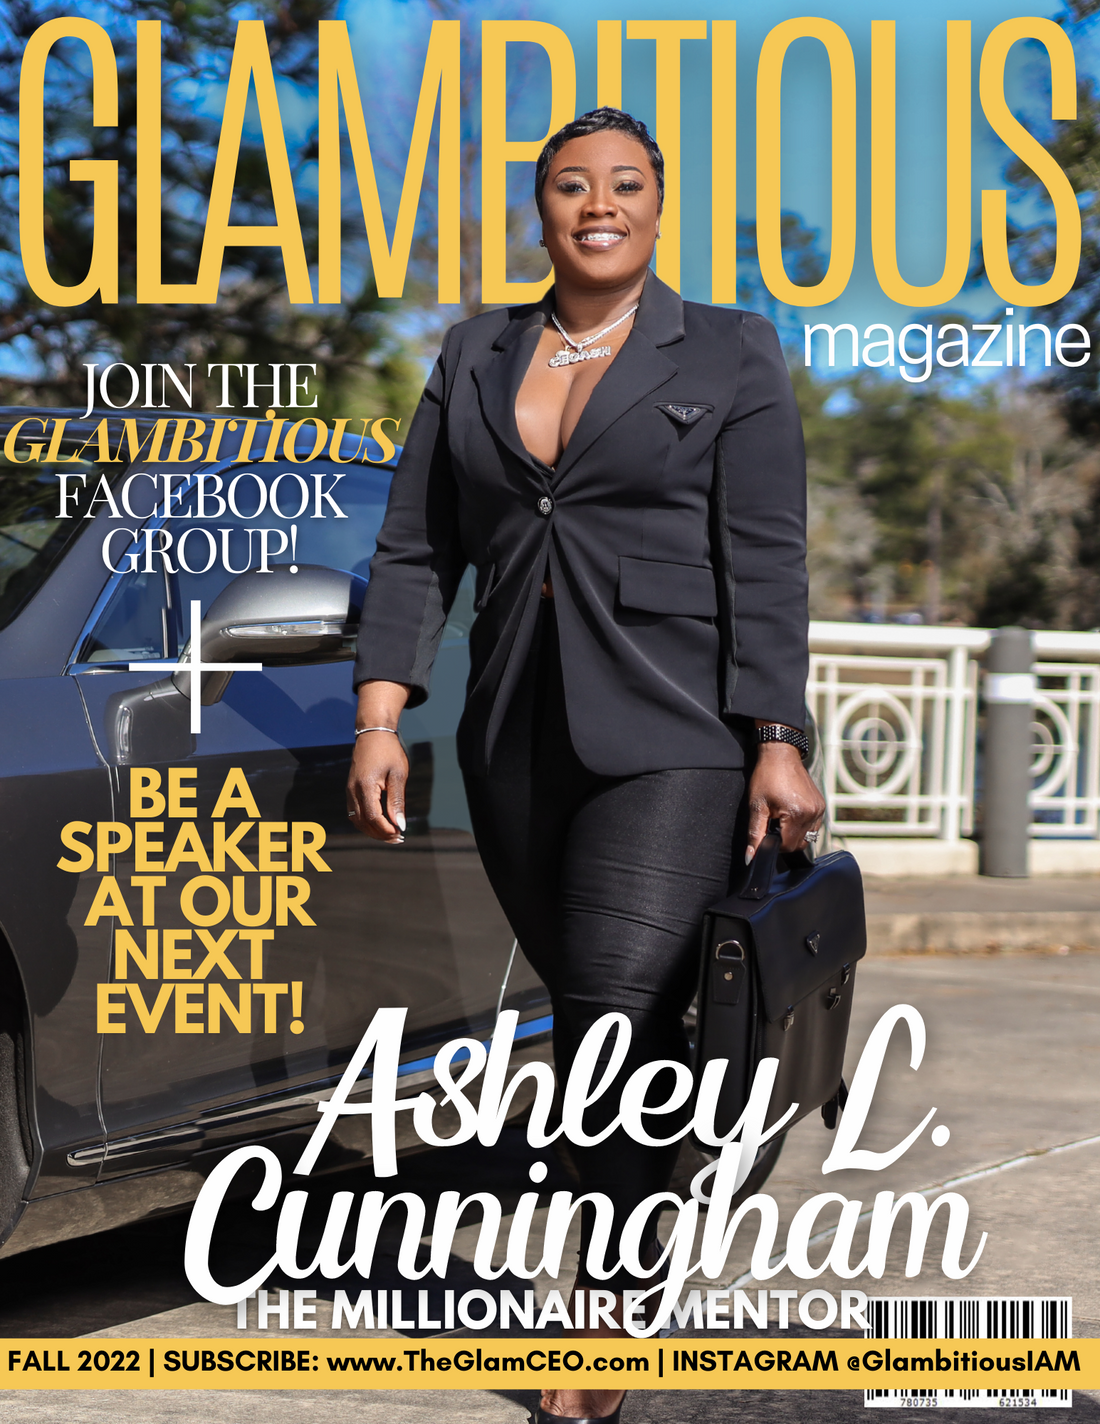 Meet Millionaire Mentor: Ashley Loveless Cunningham!